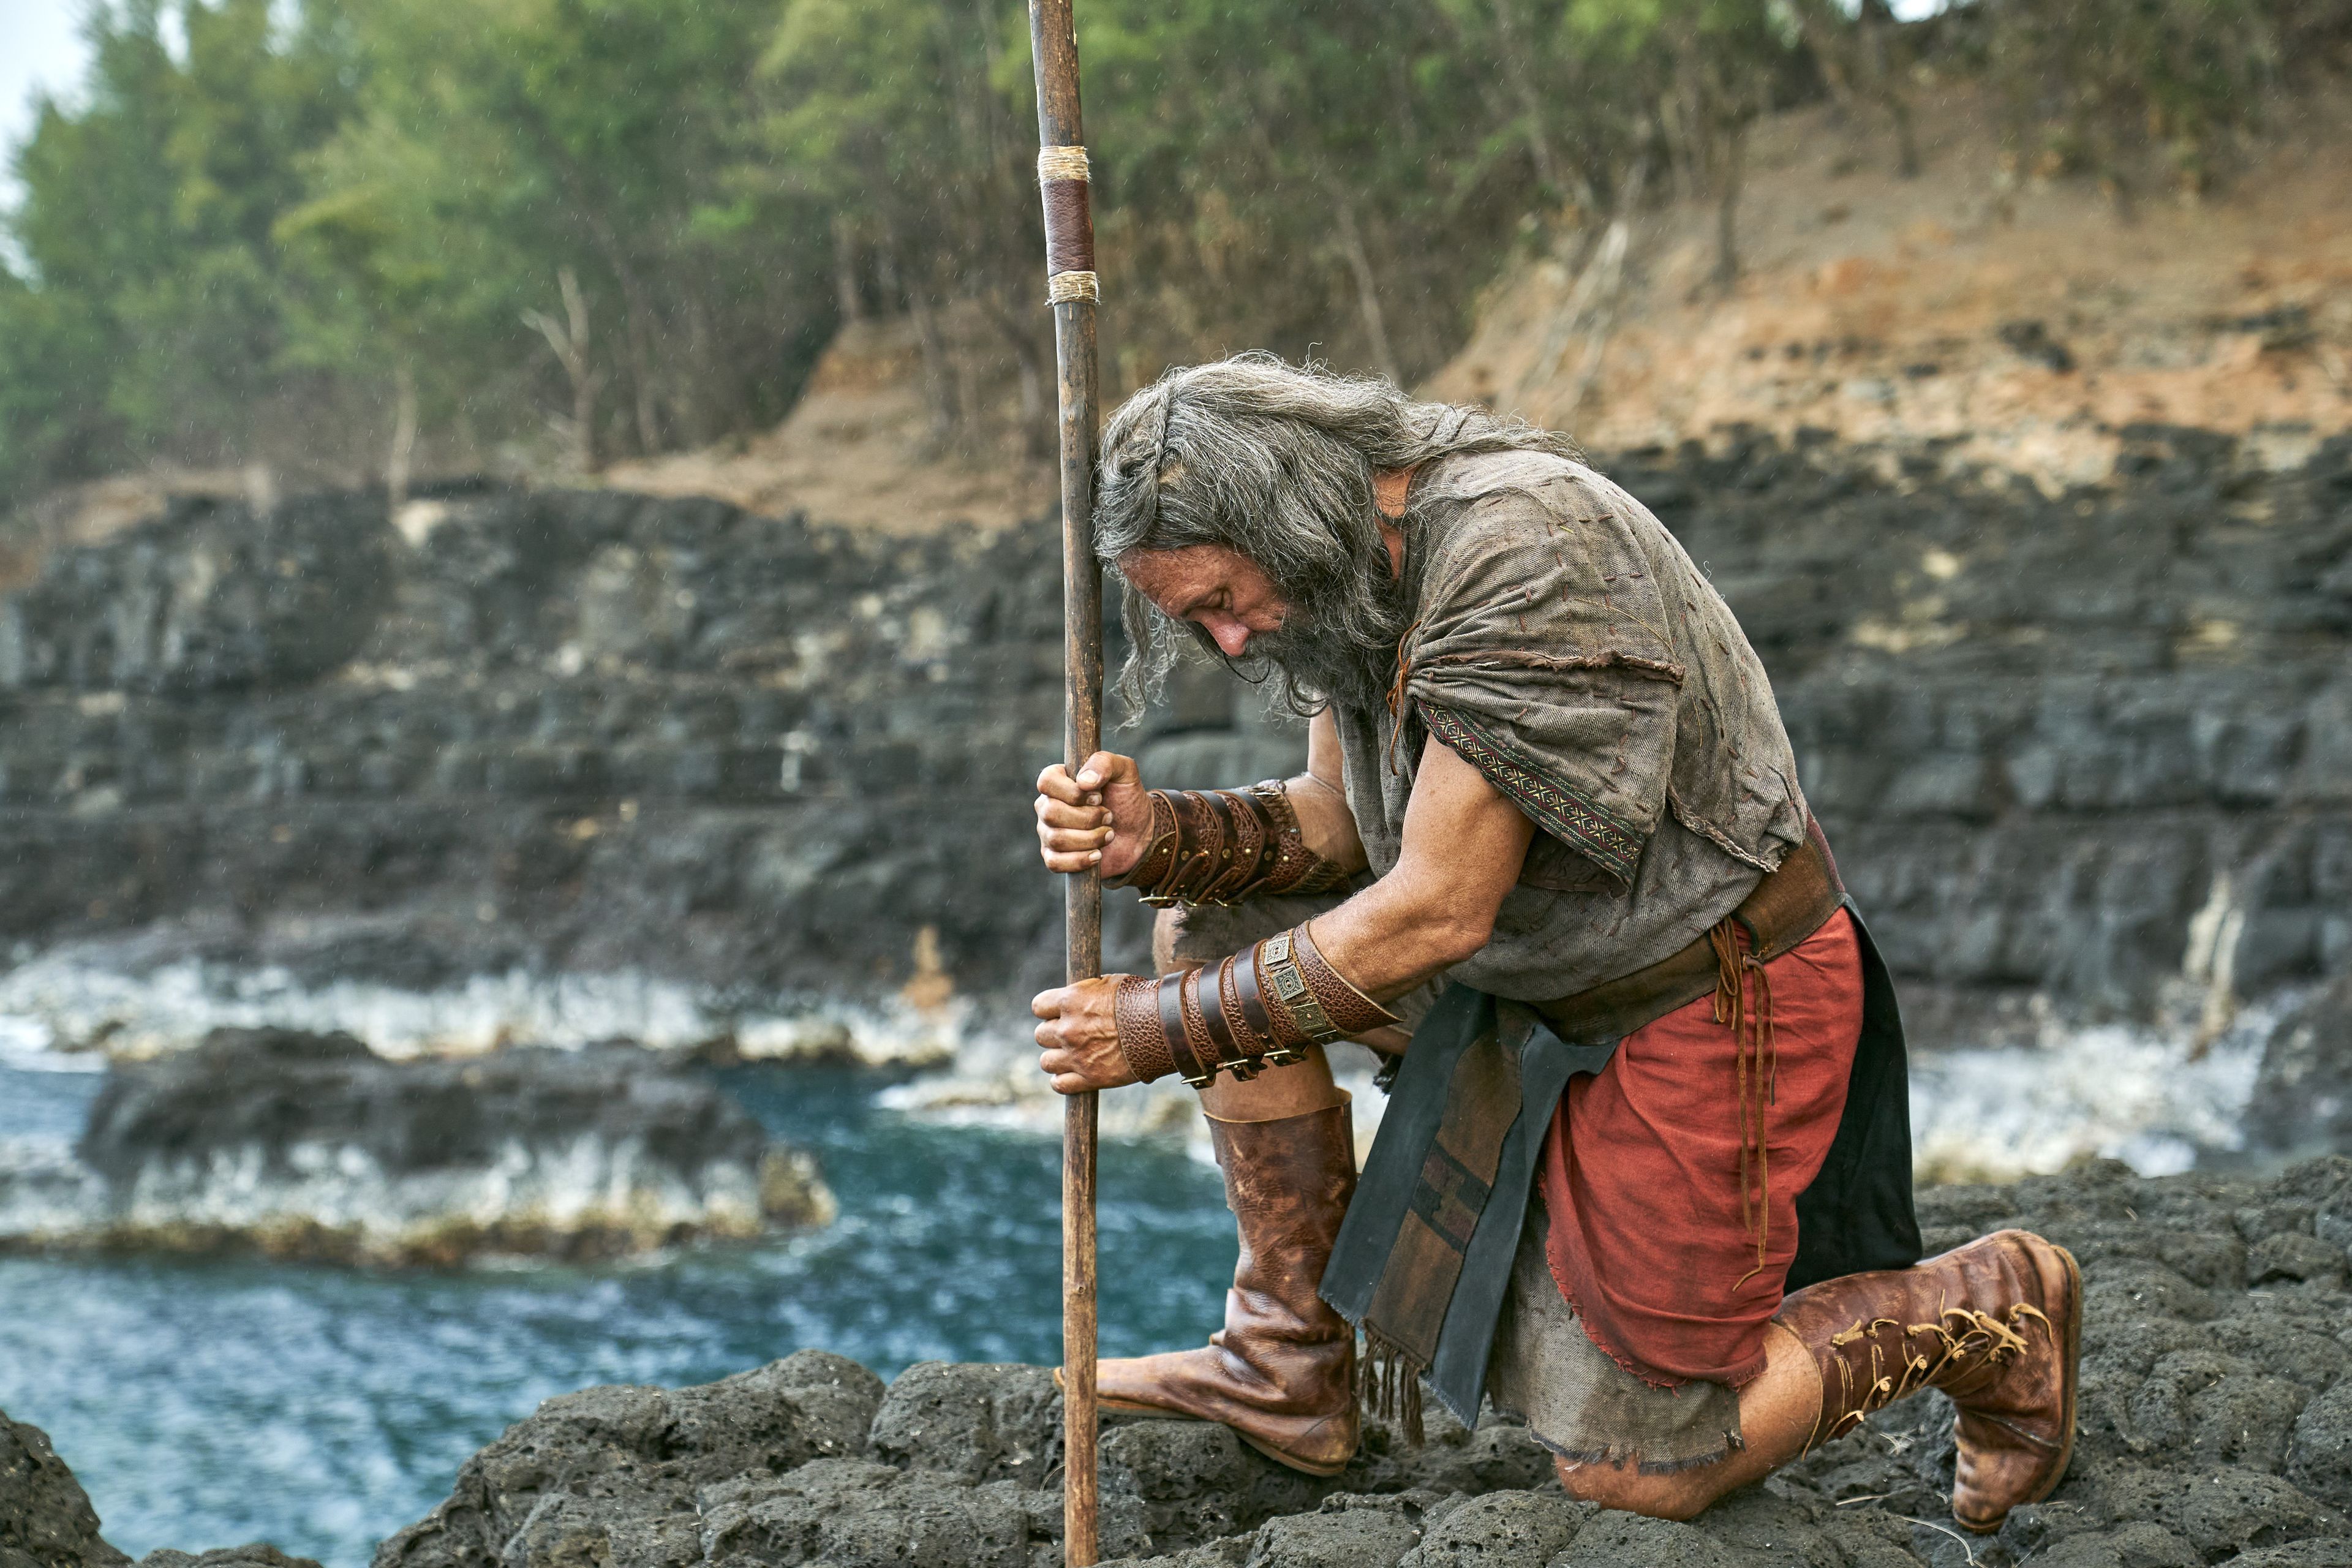 Moroni, son of Mormon, prays on a rocky shore overlooking the ocean.